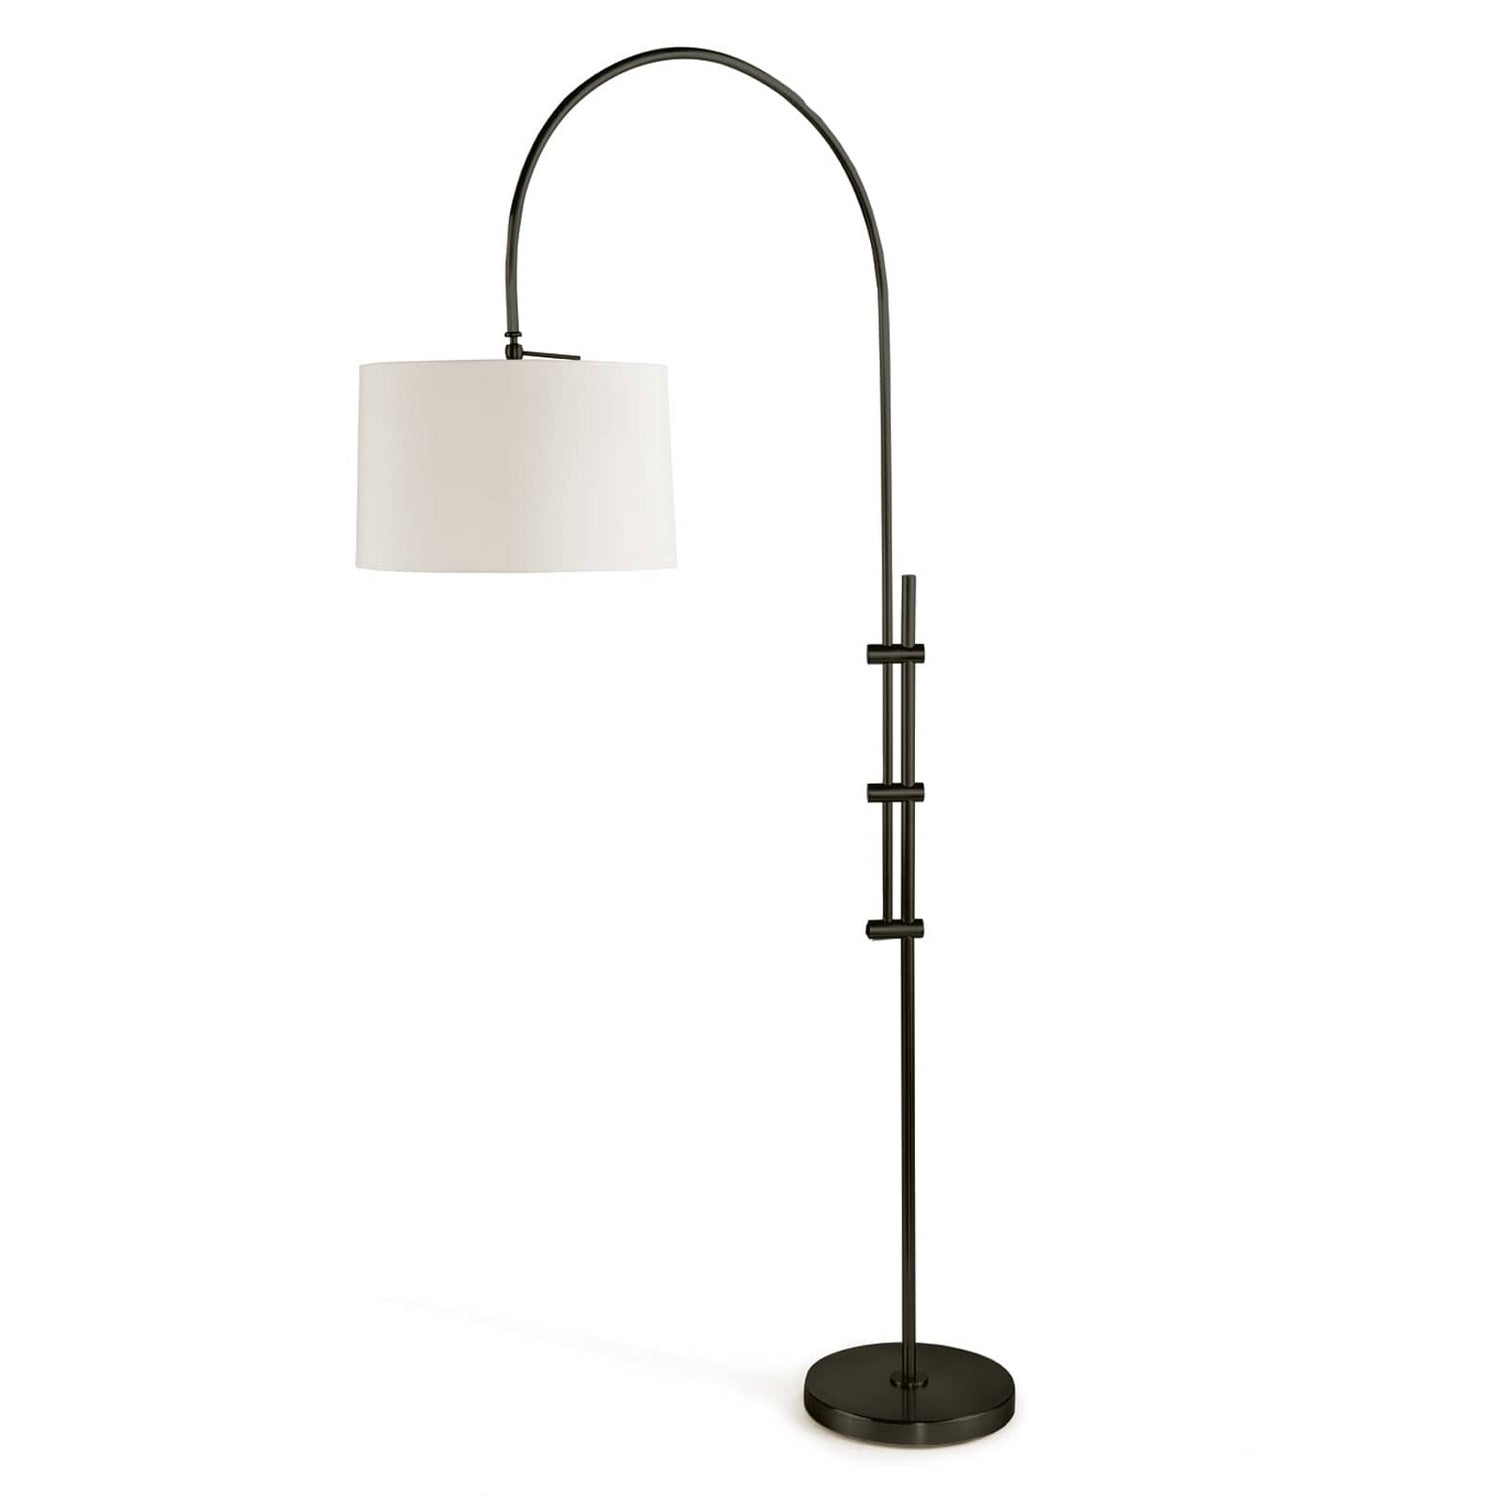 Regina Andrew - 14-1004ORB - One Light Floor Lamp - Arc - Oil Rubbed Bronze